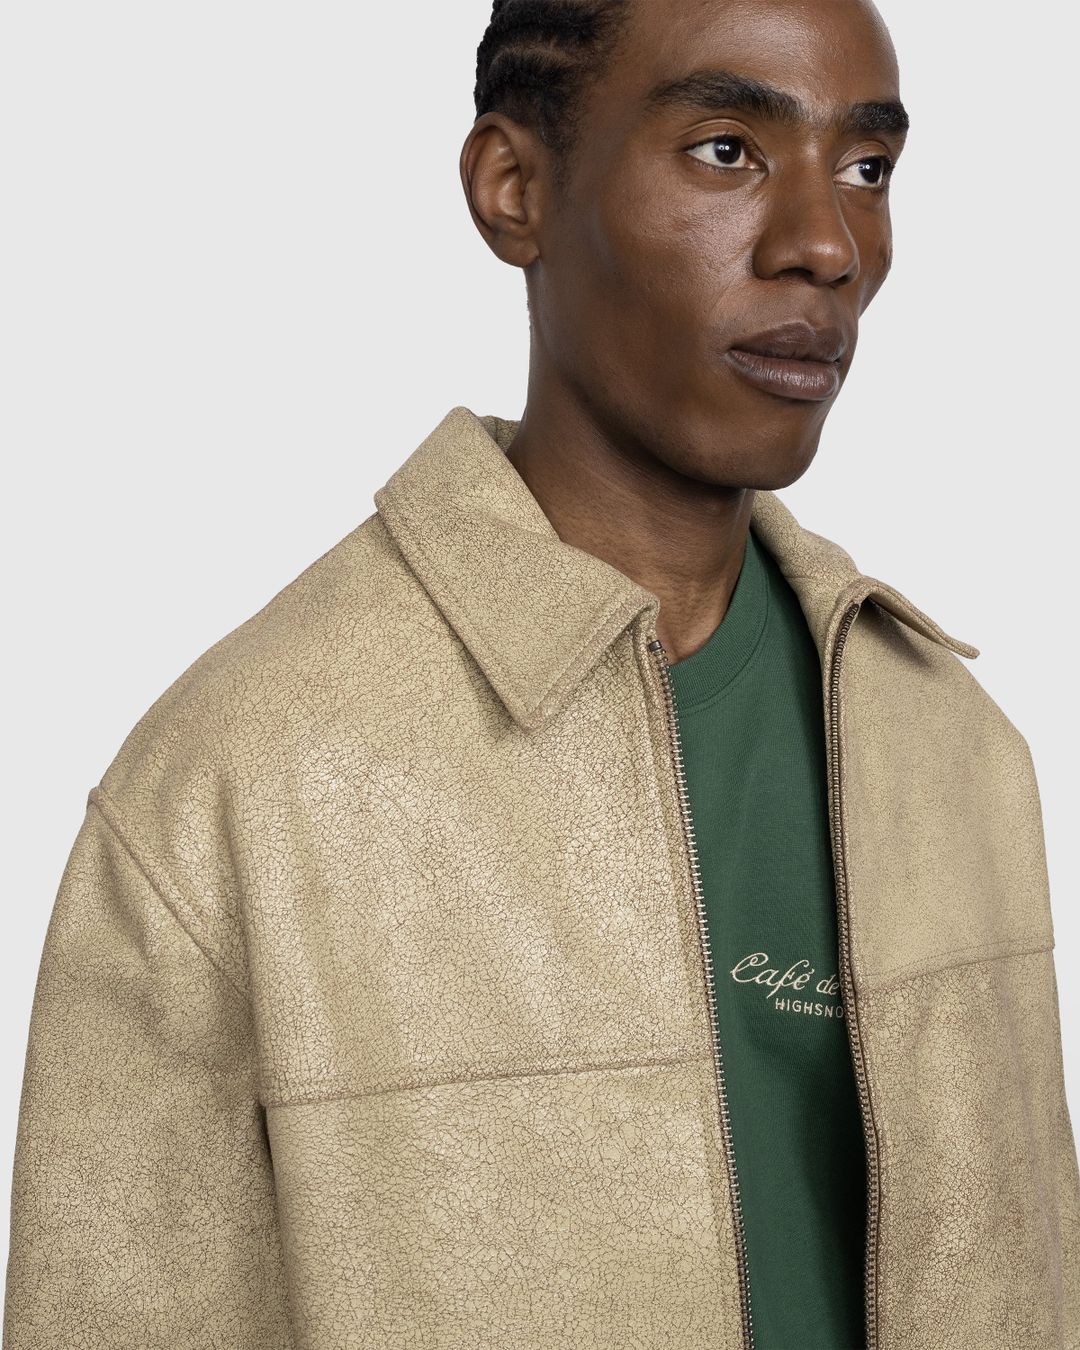 Guess USA – Crackle Leather Jacket Beige | Highsnobiety Shop